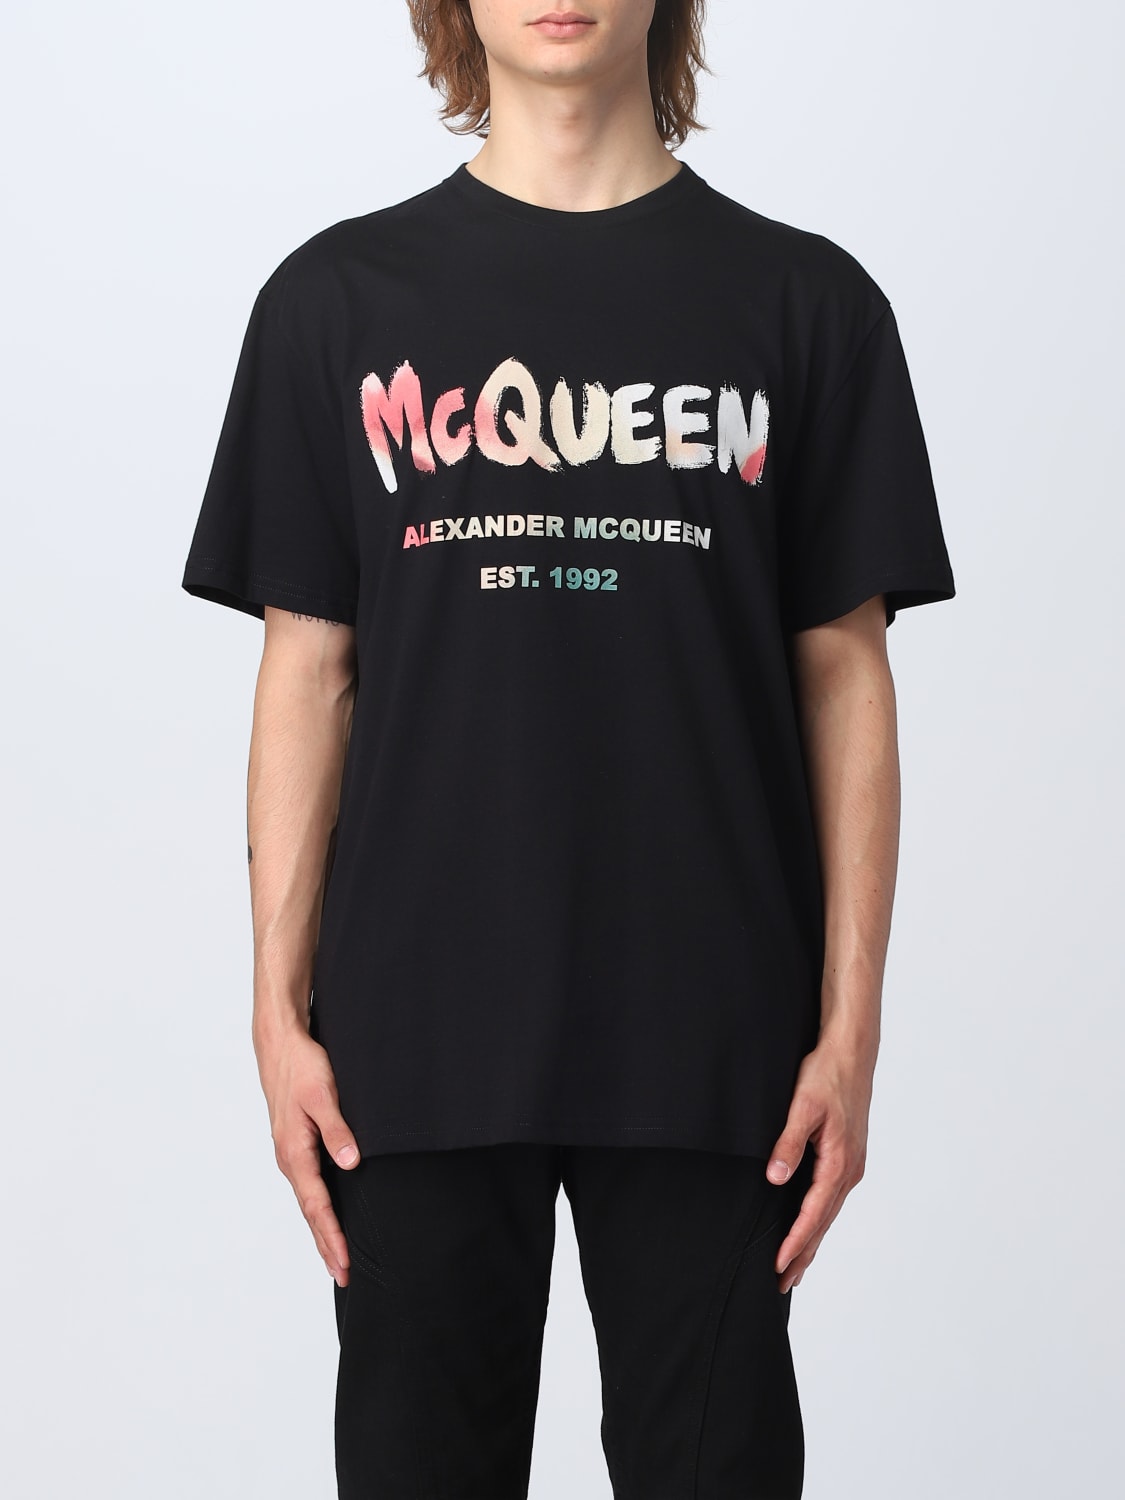 ALEXANDER MCQUEEN: t-shirt for men - Black | Alexander Mcqueen t